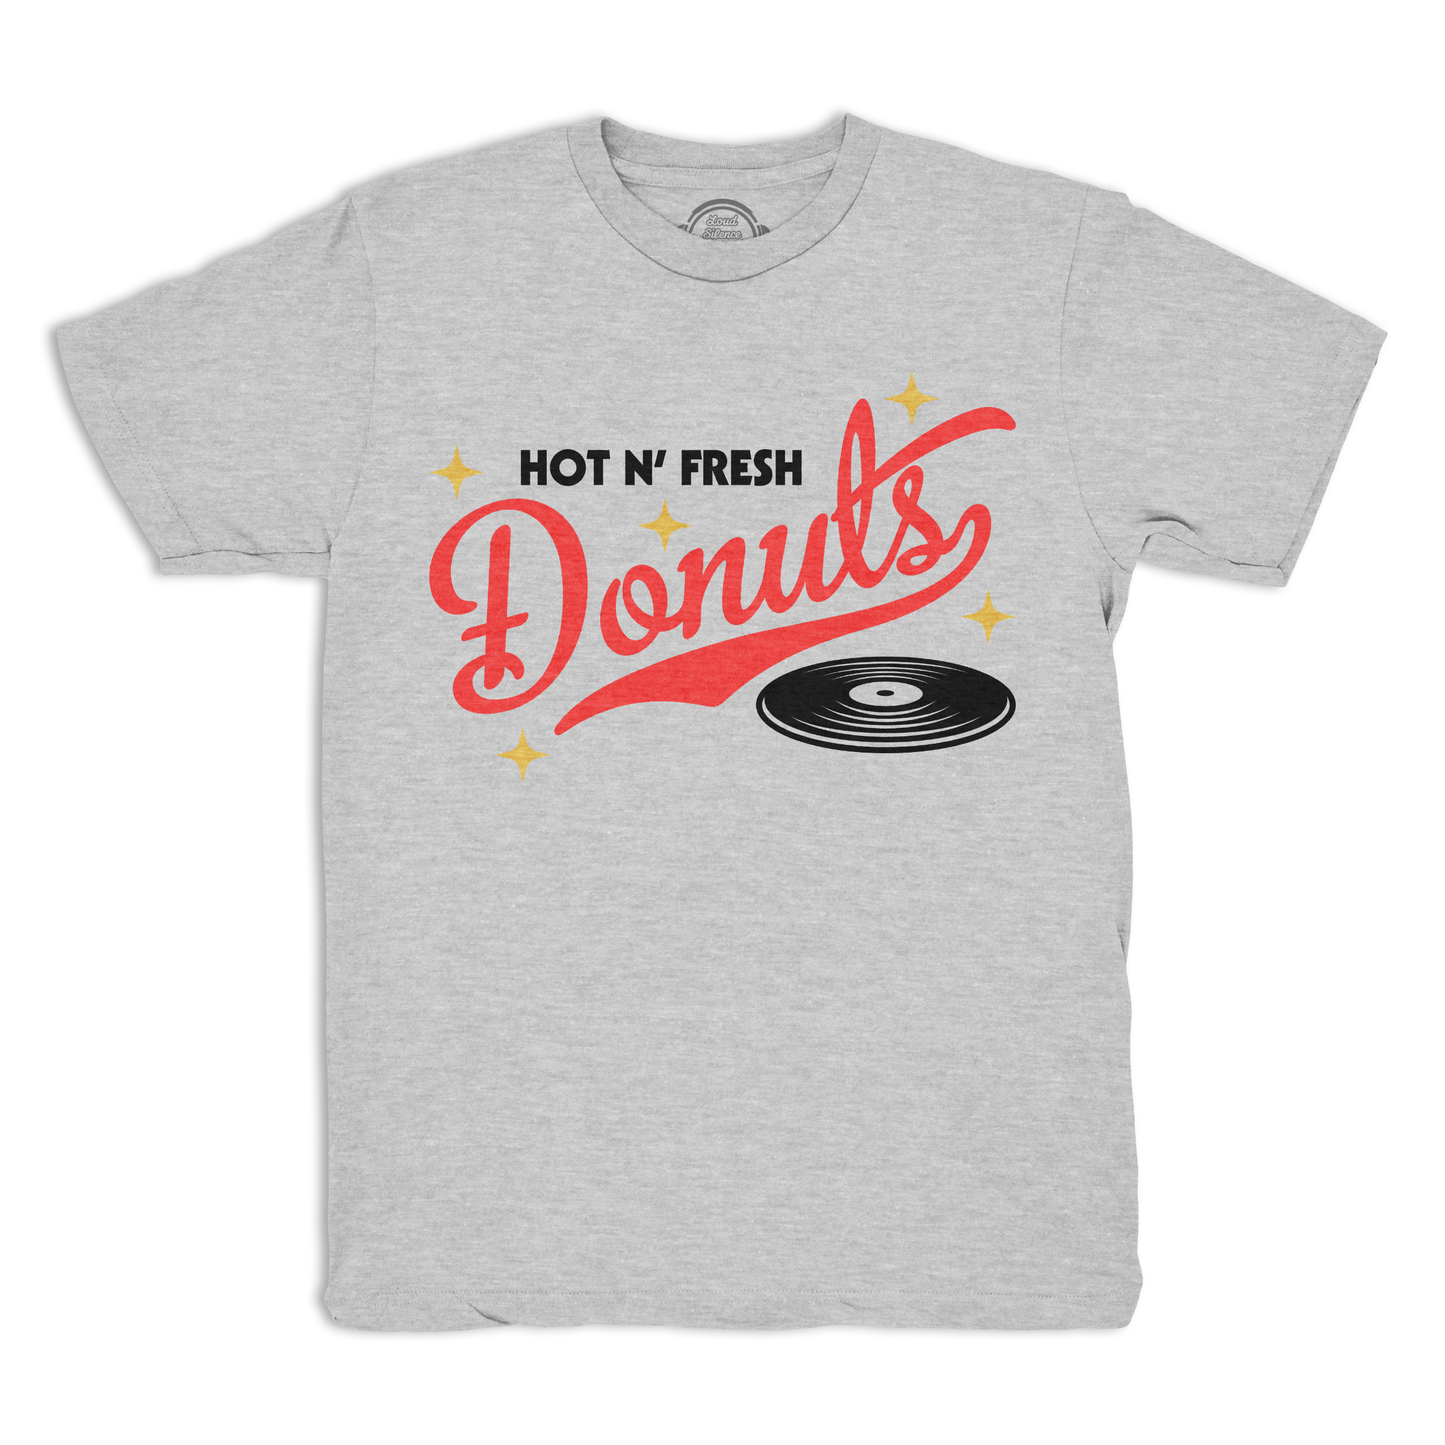 Fresh Donuts (gray)